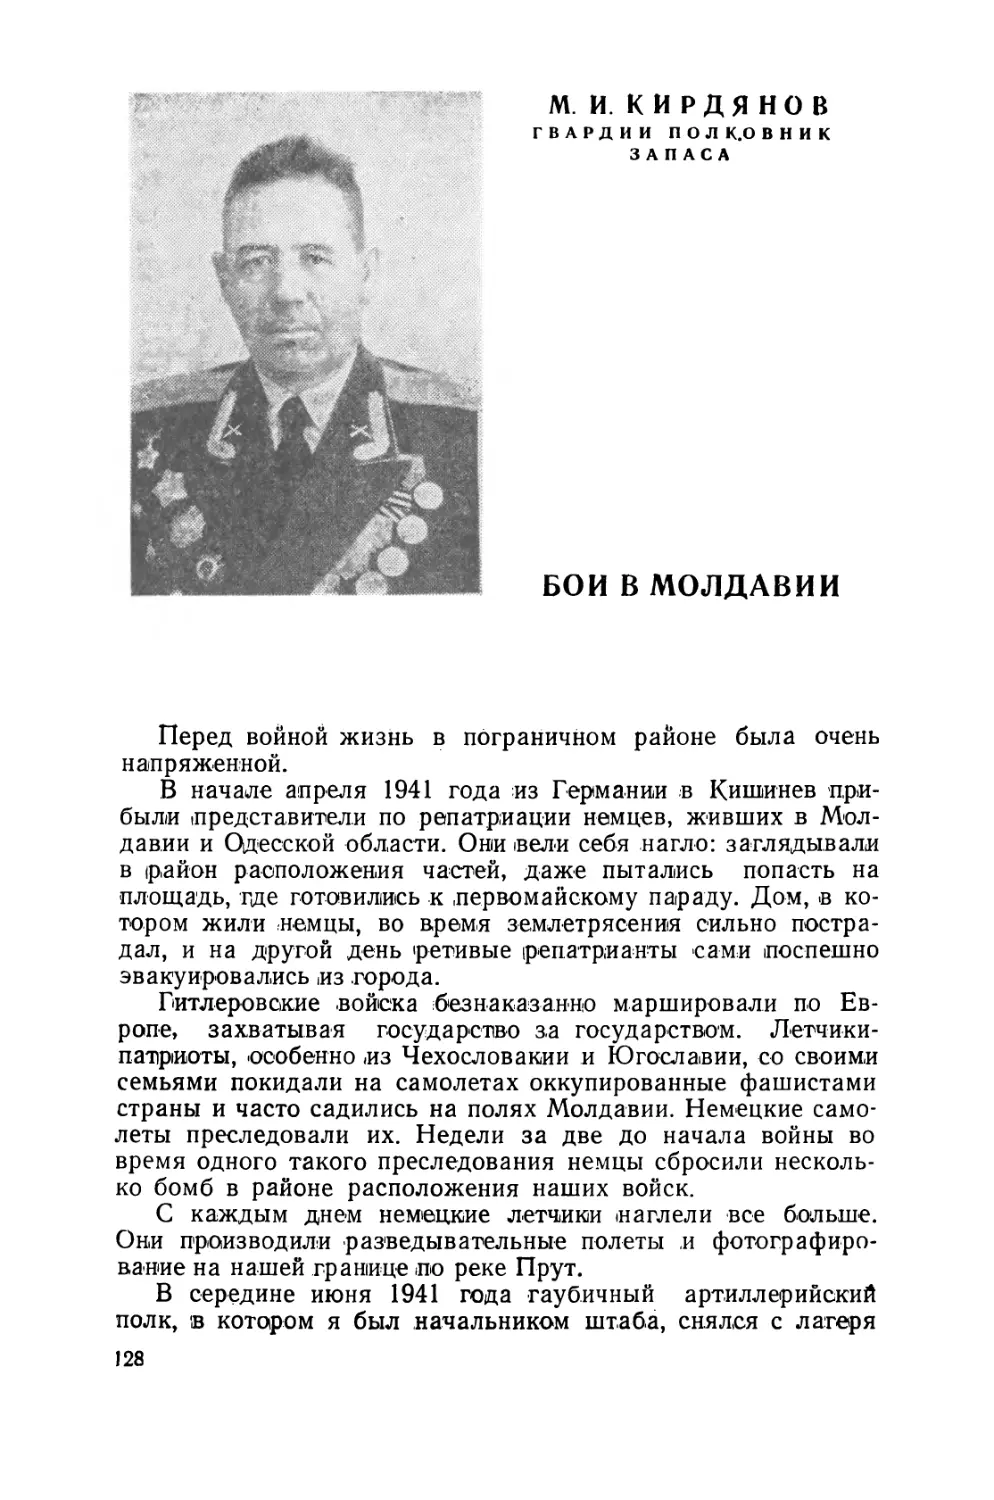 М. Кирдянов. Бои  в  Молдавии